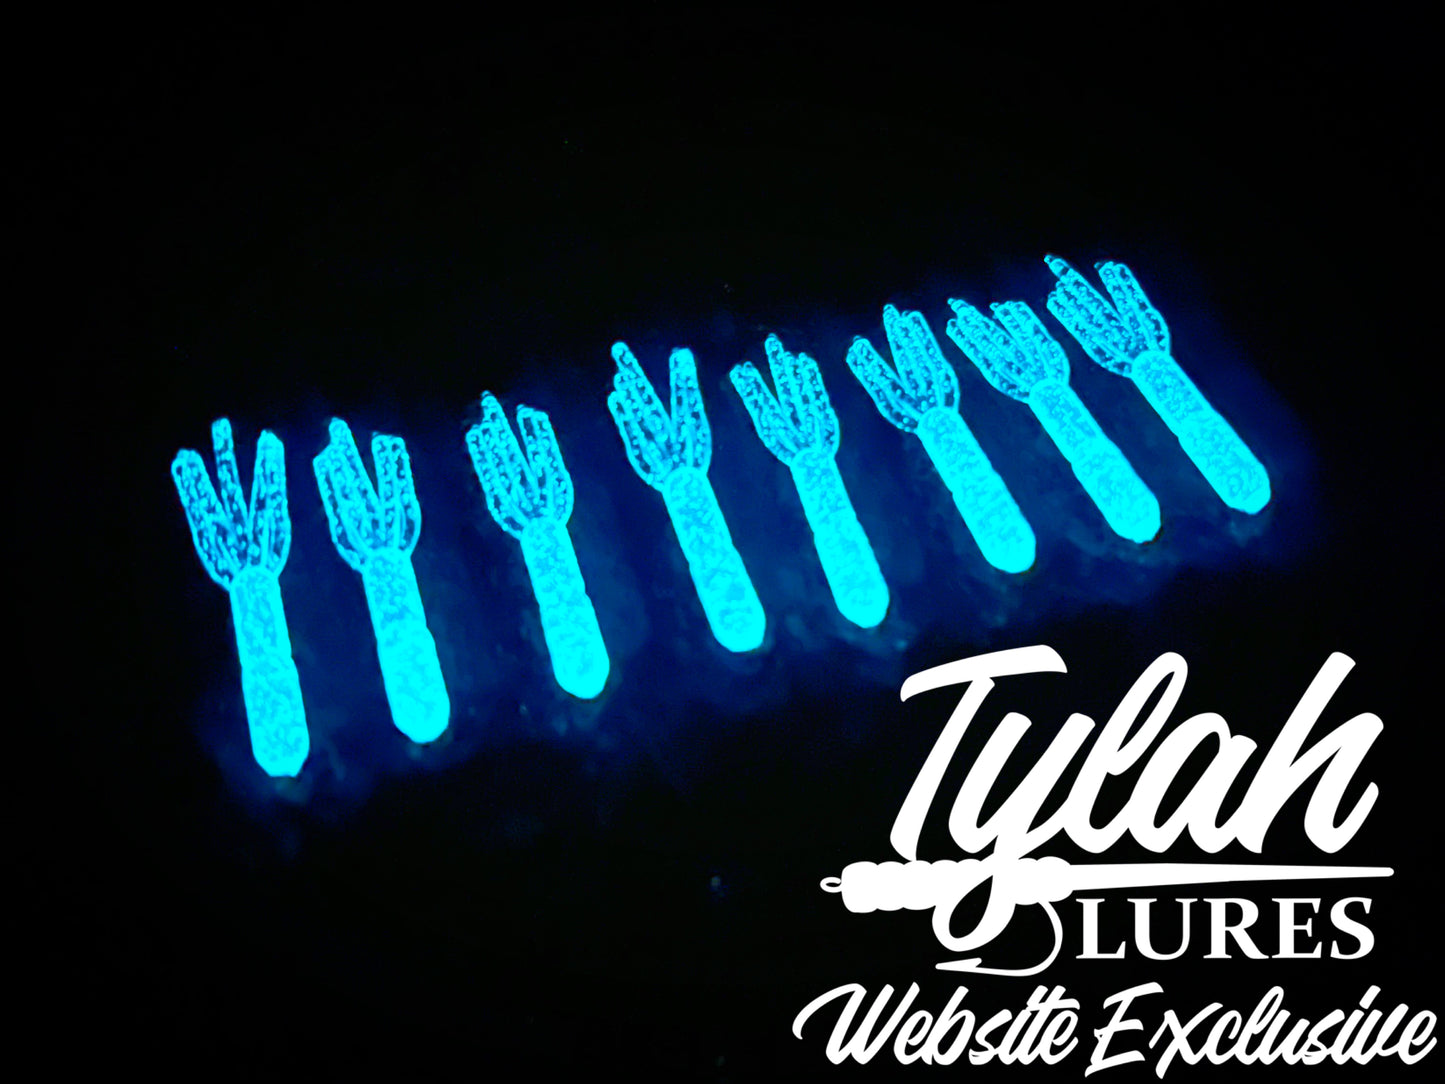 TylahLures Website Exclusive UV Blue Glow Shidasa 1in